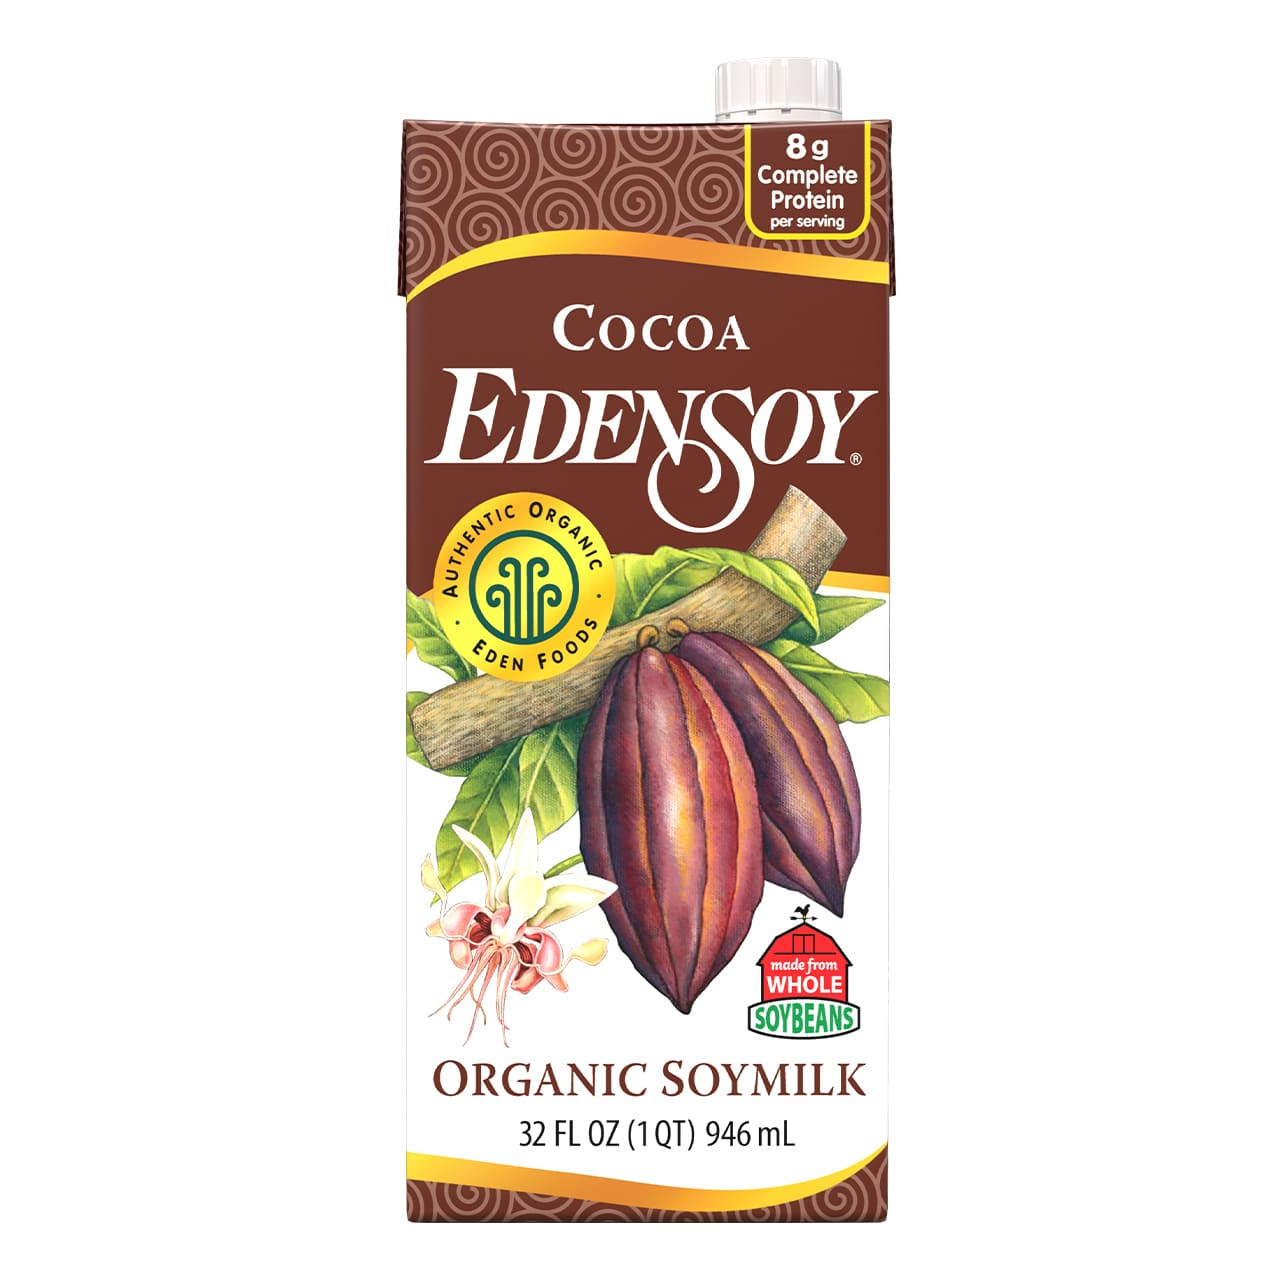 Cocoa Edensoy, organic